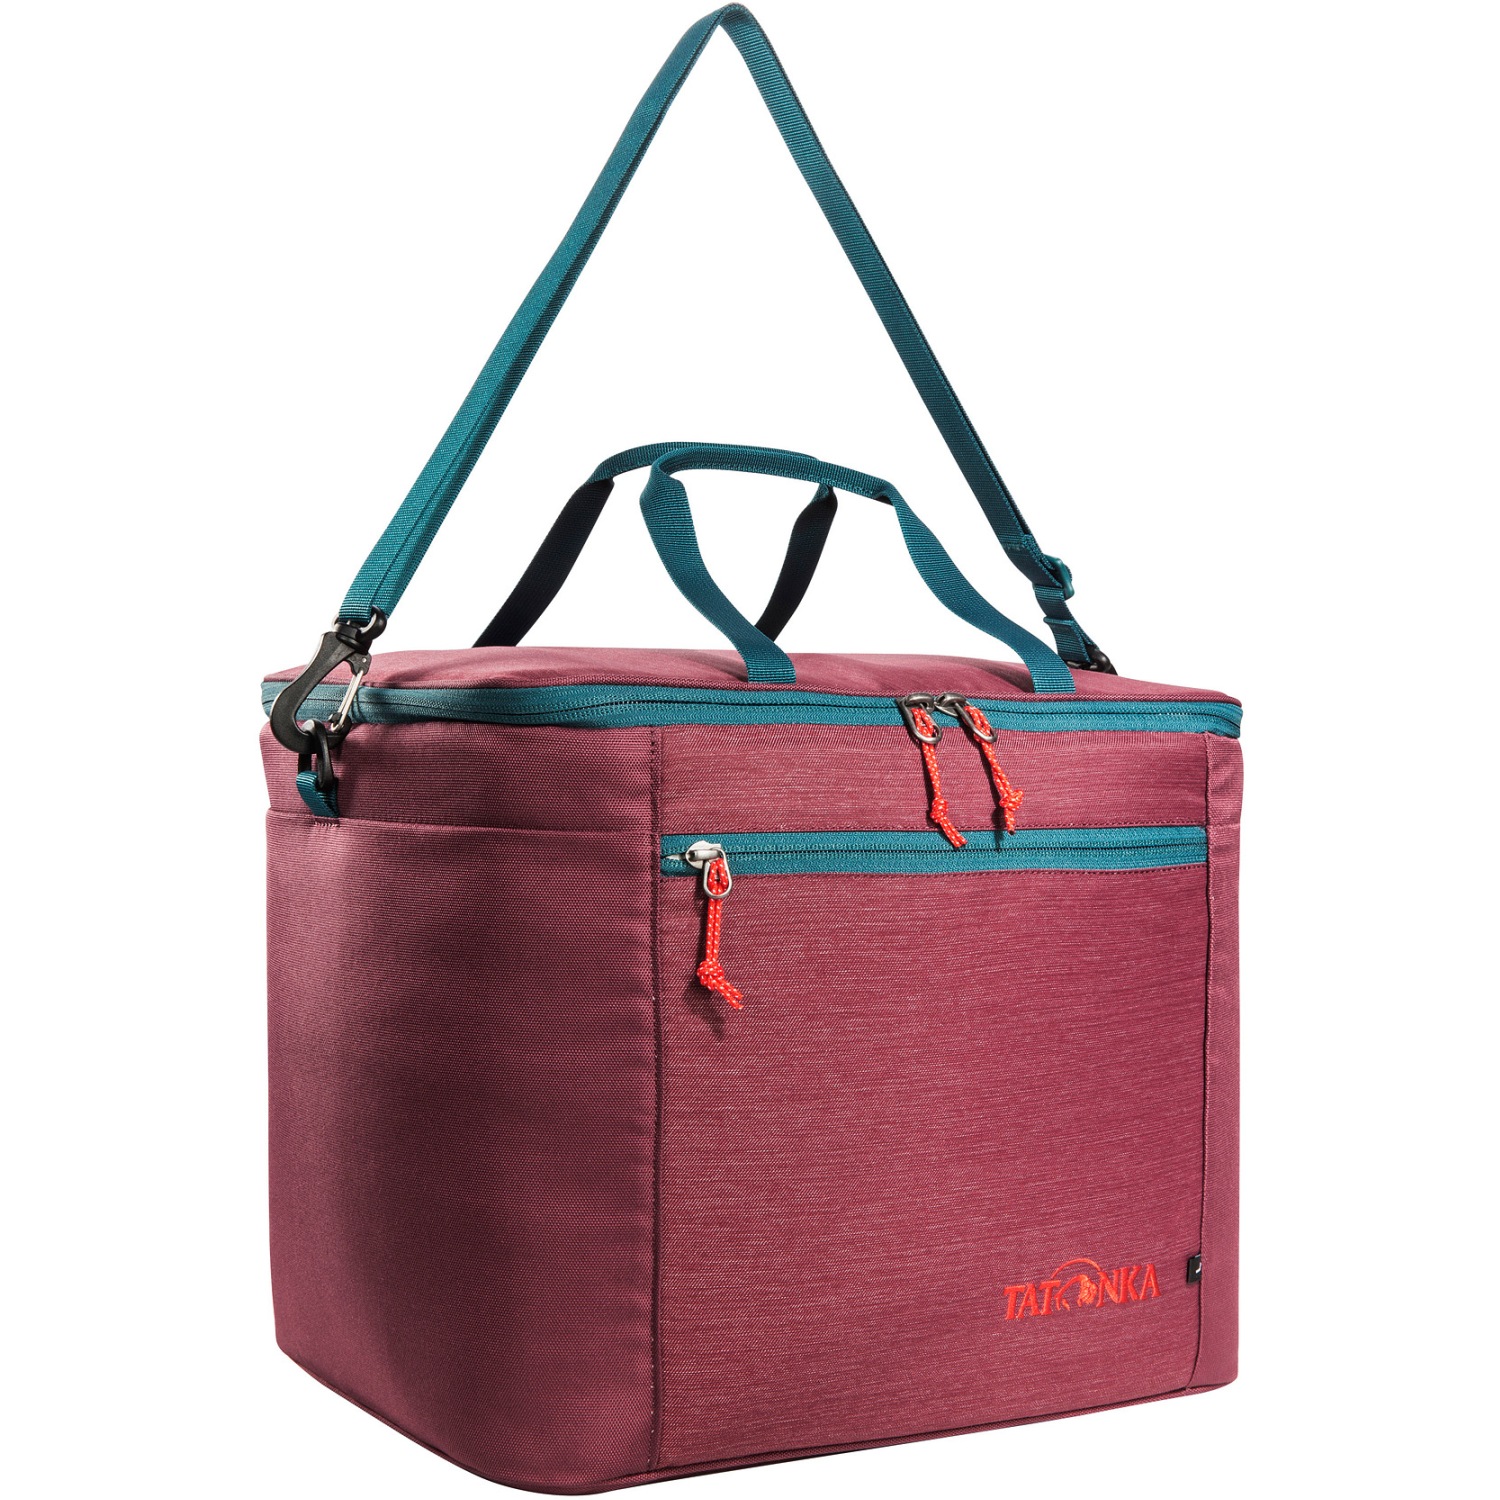 Produktbild von Tatonka Cooler Bag L - Kühltasche - bordeaux red